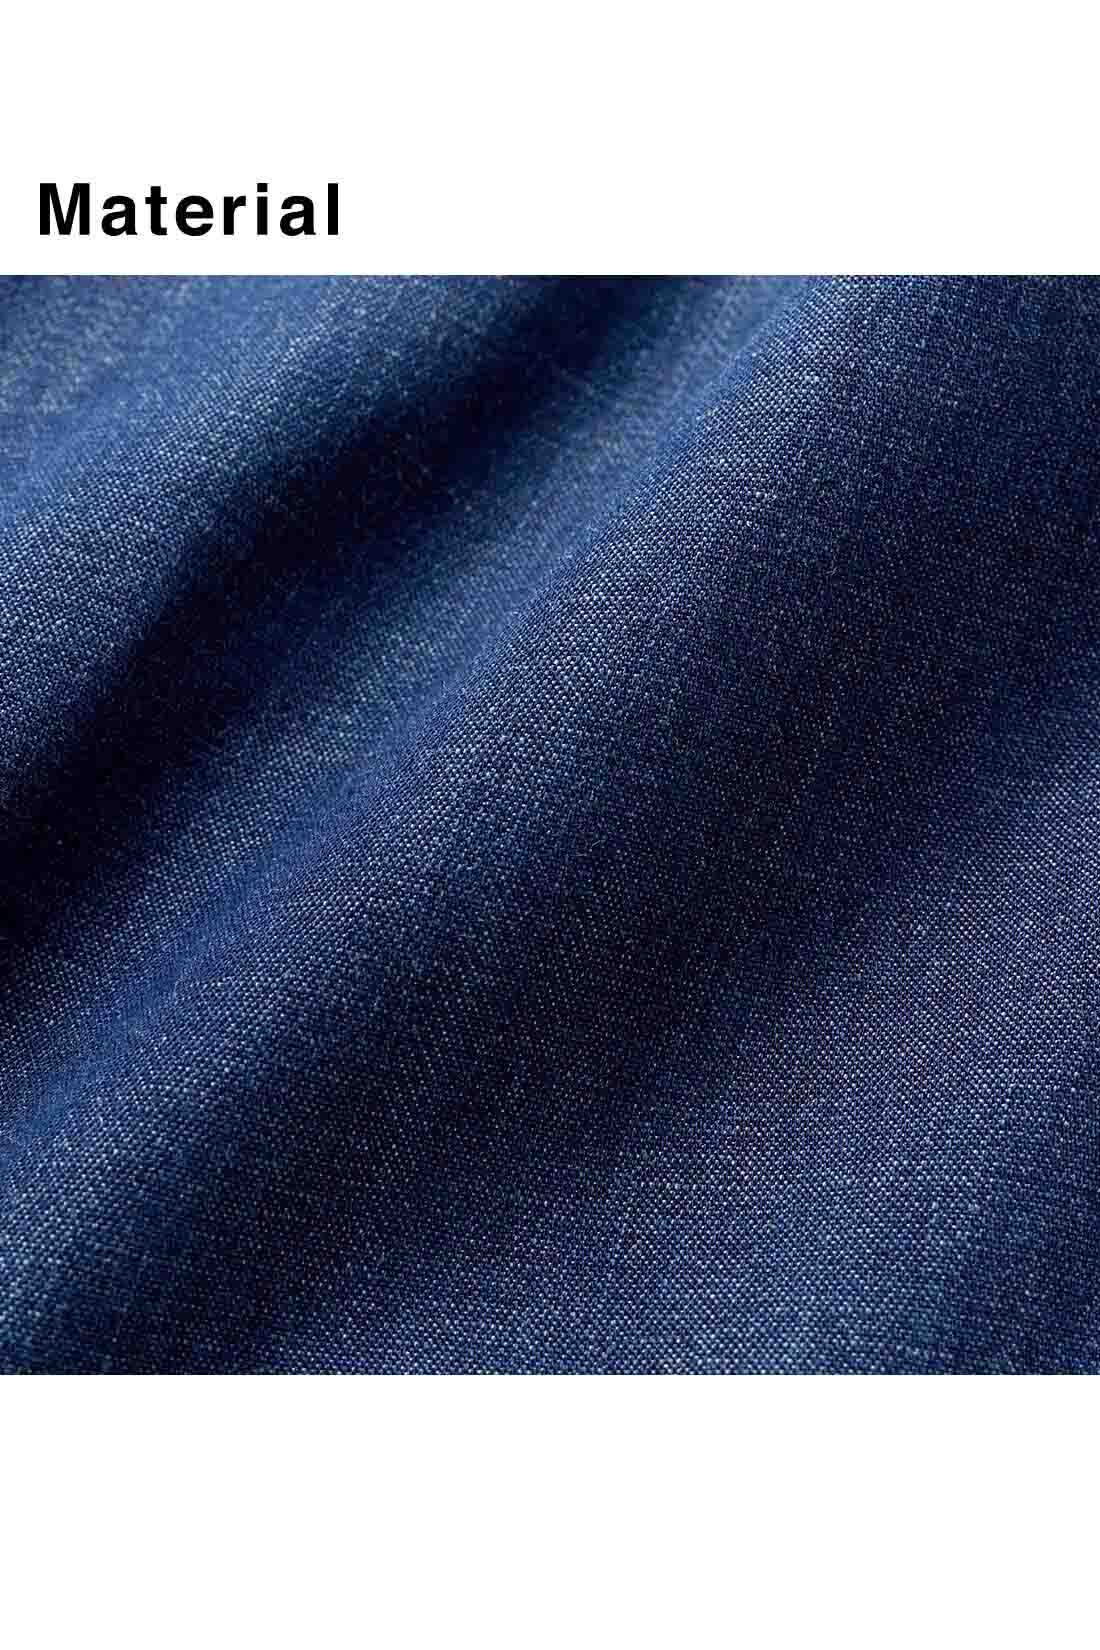 IEDIT|IEDIT[イディット]　接触冷感素材で涼やかな やわらかワイドシルエットデニムパンツ〈ネイビー〉|テンセルTM繊維・綿・麻のナチュラルな素材感。濃いブルーとネップの風合いがデニム好きを魅了。